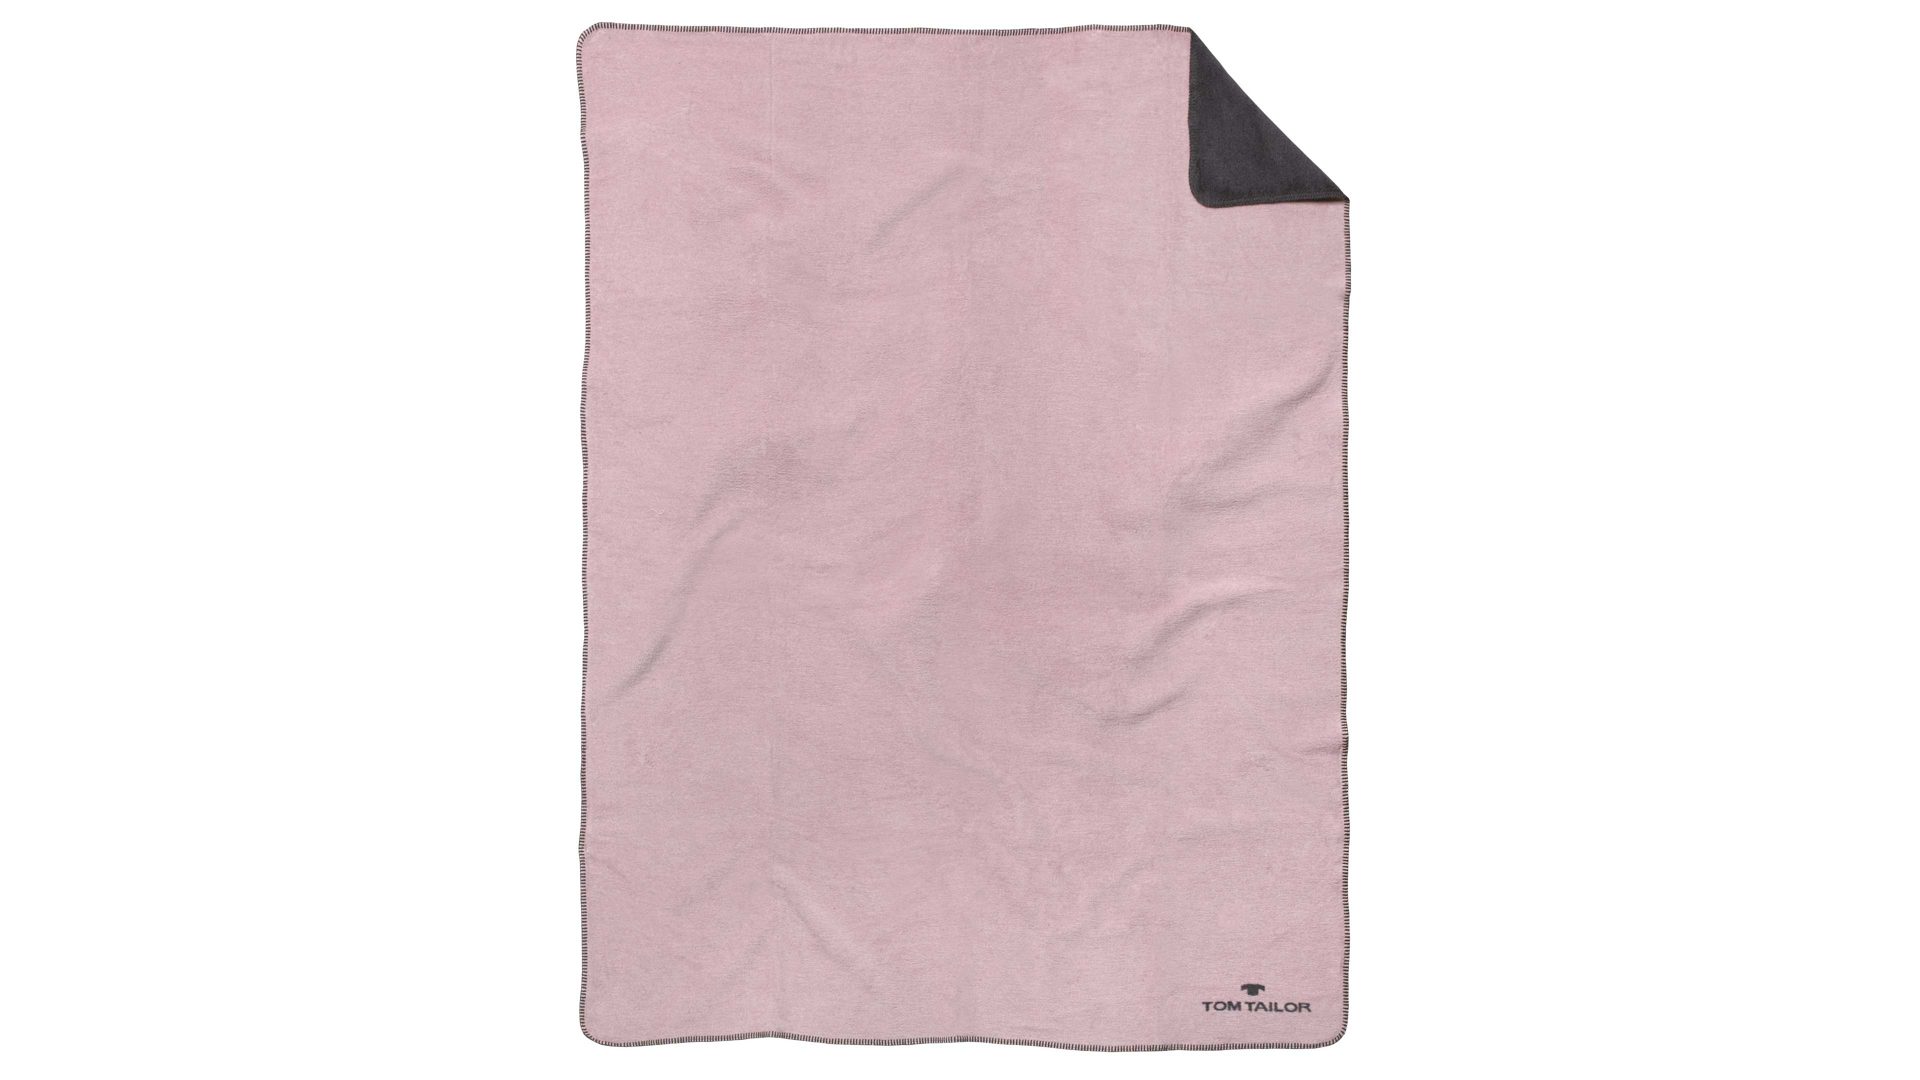 Wohndecke Biberna aus Stoff in Pastellfarben TOM TAILOR Doubleface-Decke rosefarbenes & dunkelgraues Uni – ca. 150 x 200 cm